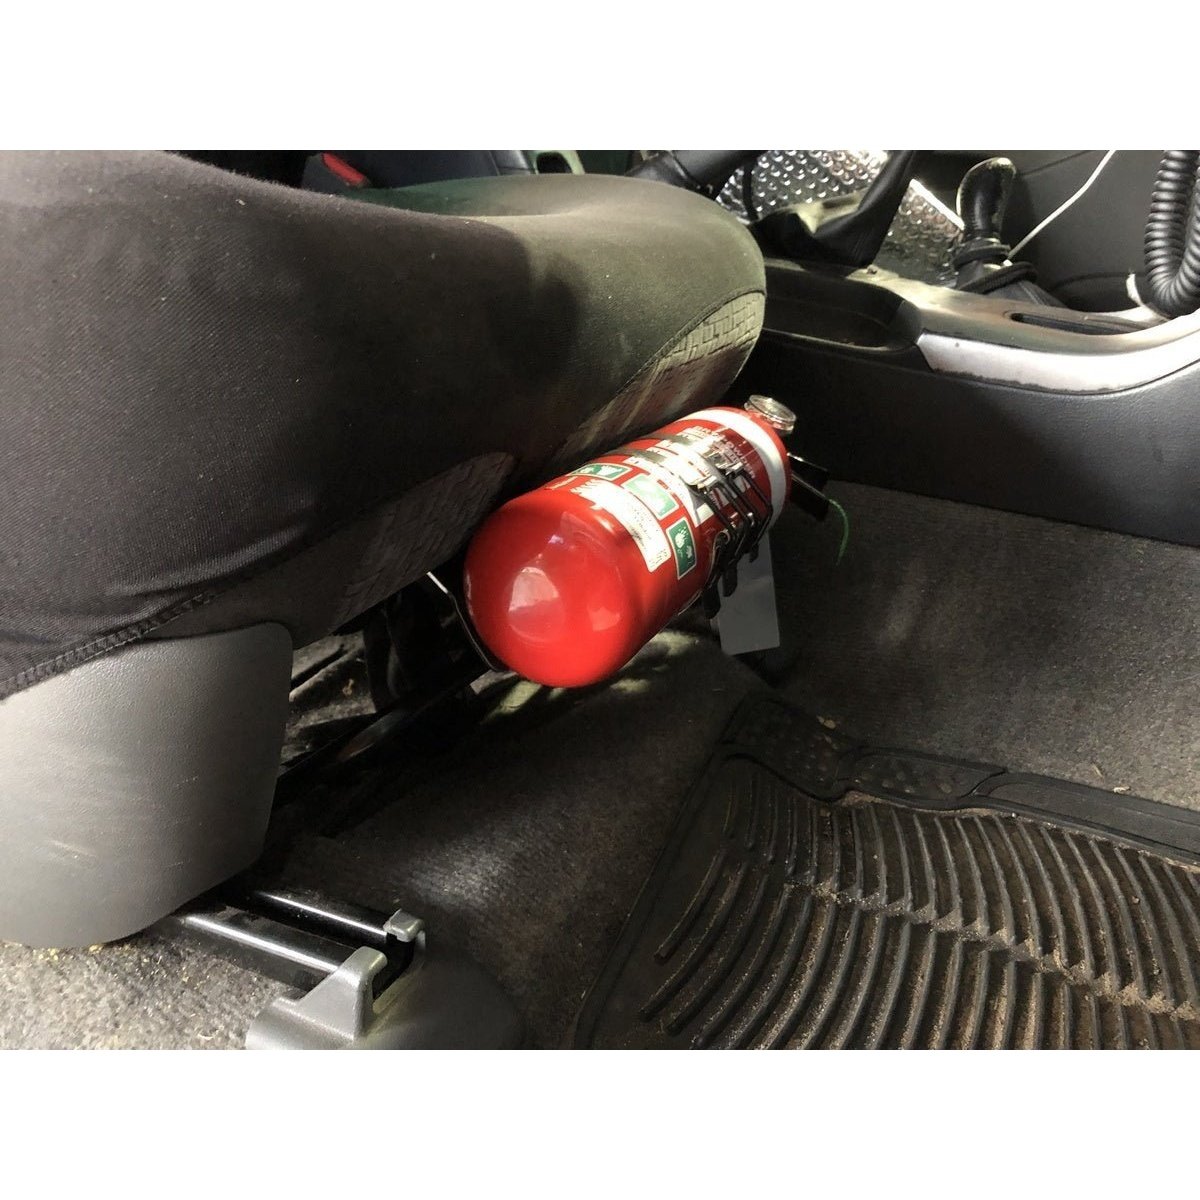 Fire Extinguisher Seat Mount to suit Toyota Prado 120 - AMD Touring